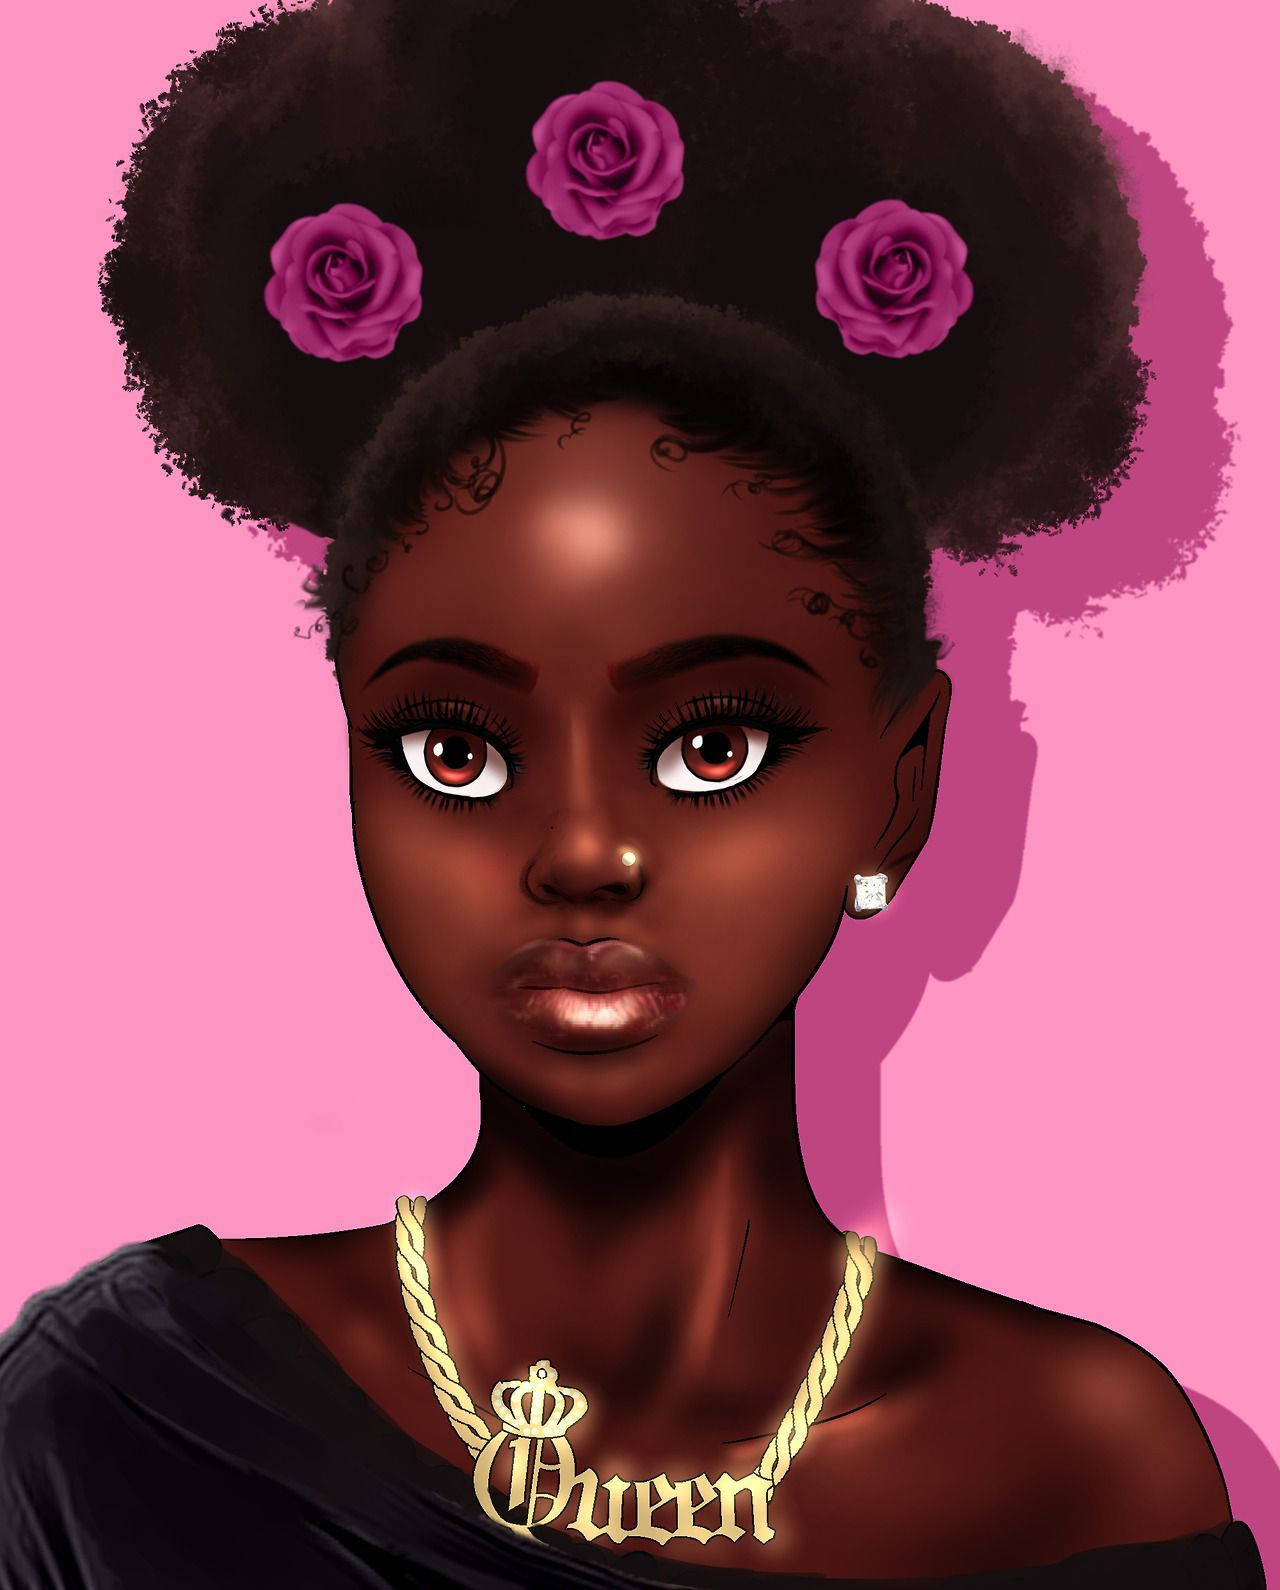 Black Woman With Queen Necklace Digital Art Wallpaper